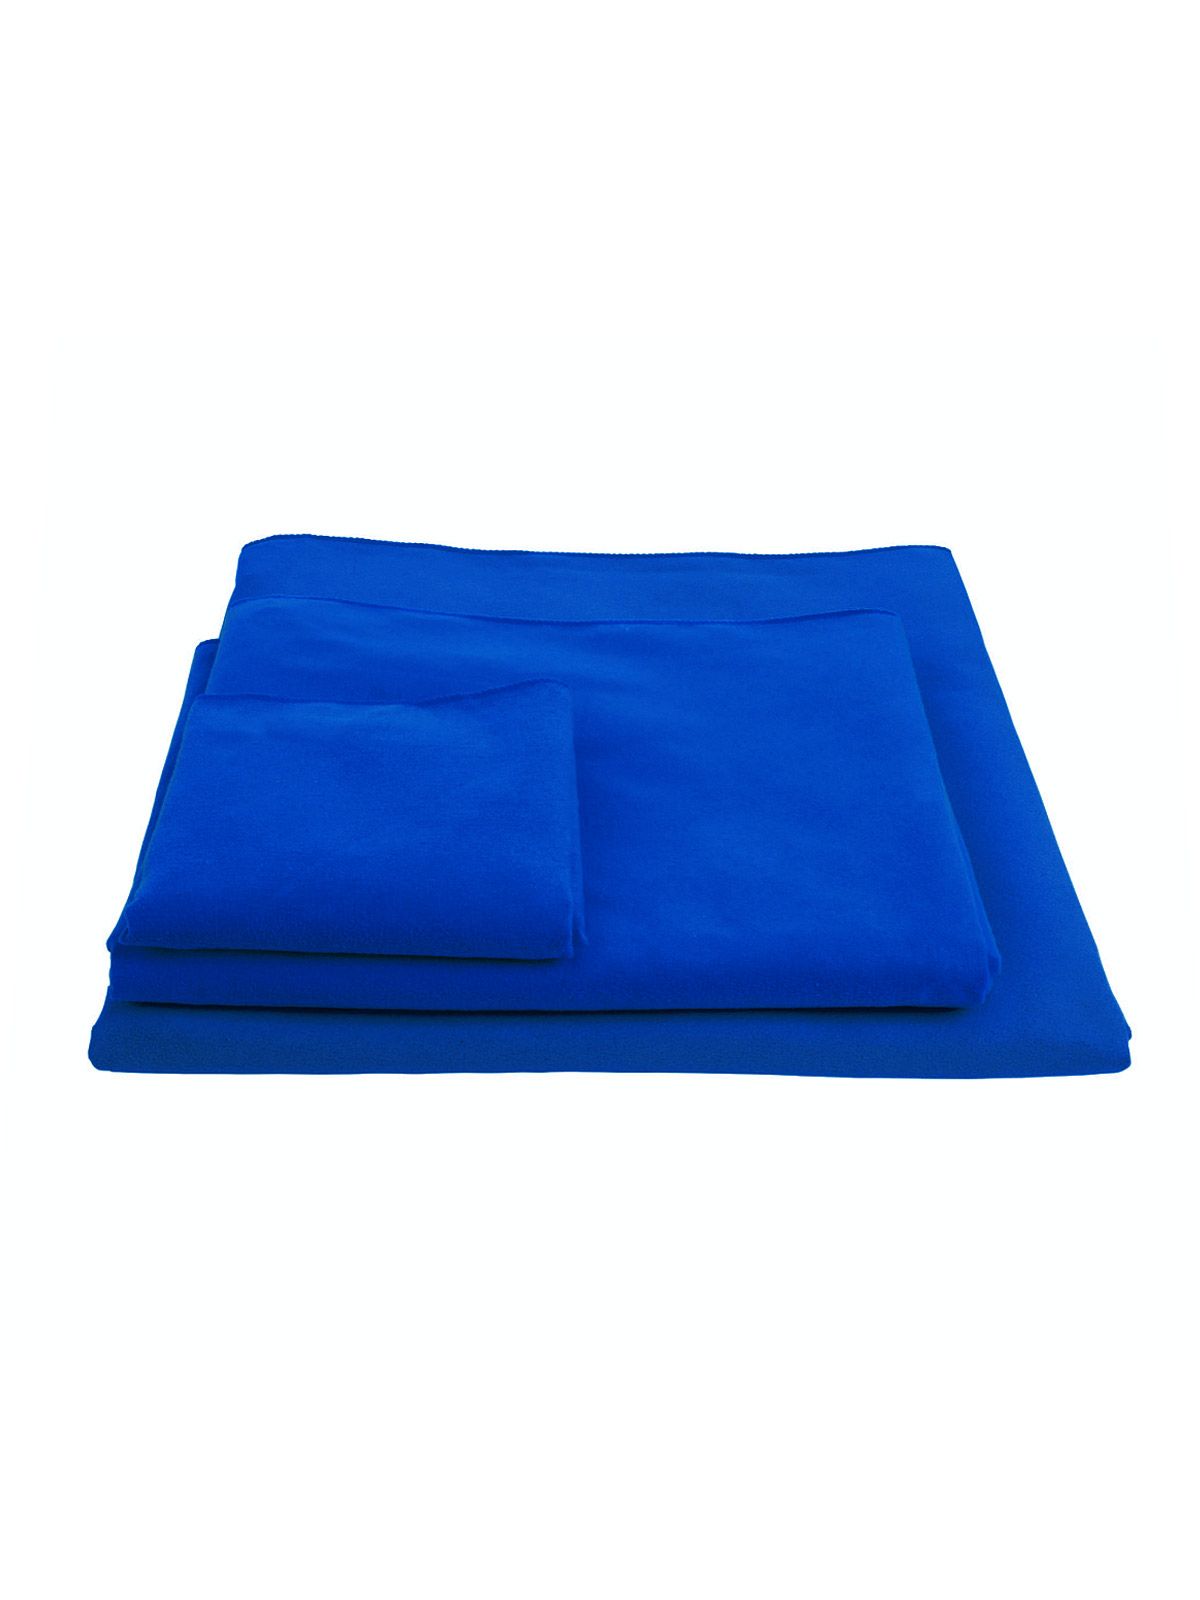 promo-towel-90x170-royal-blue.webp